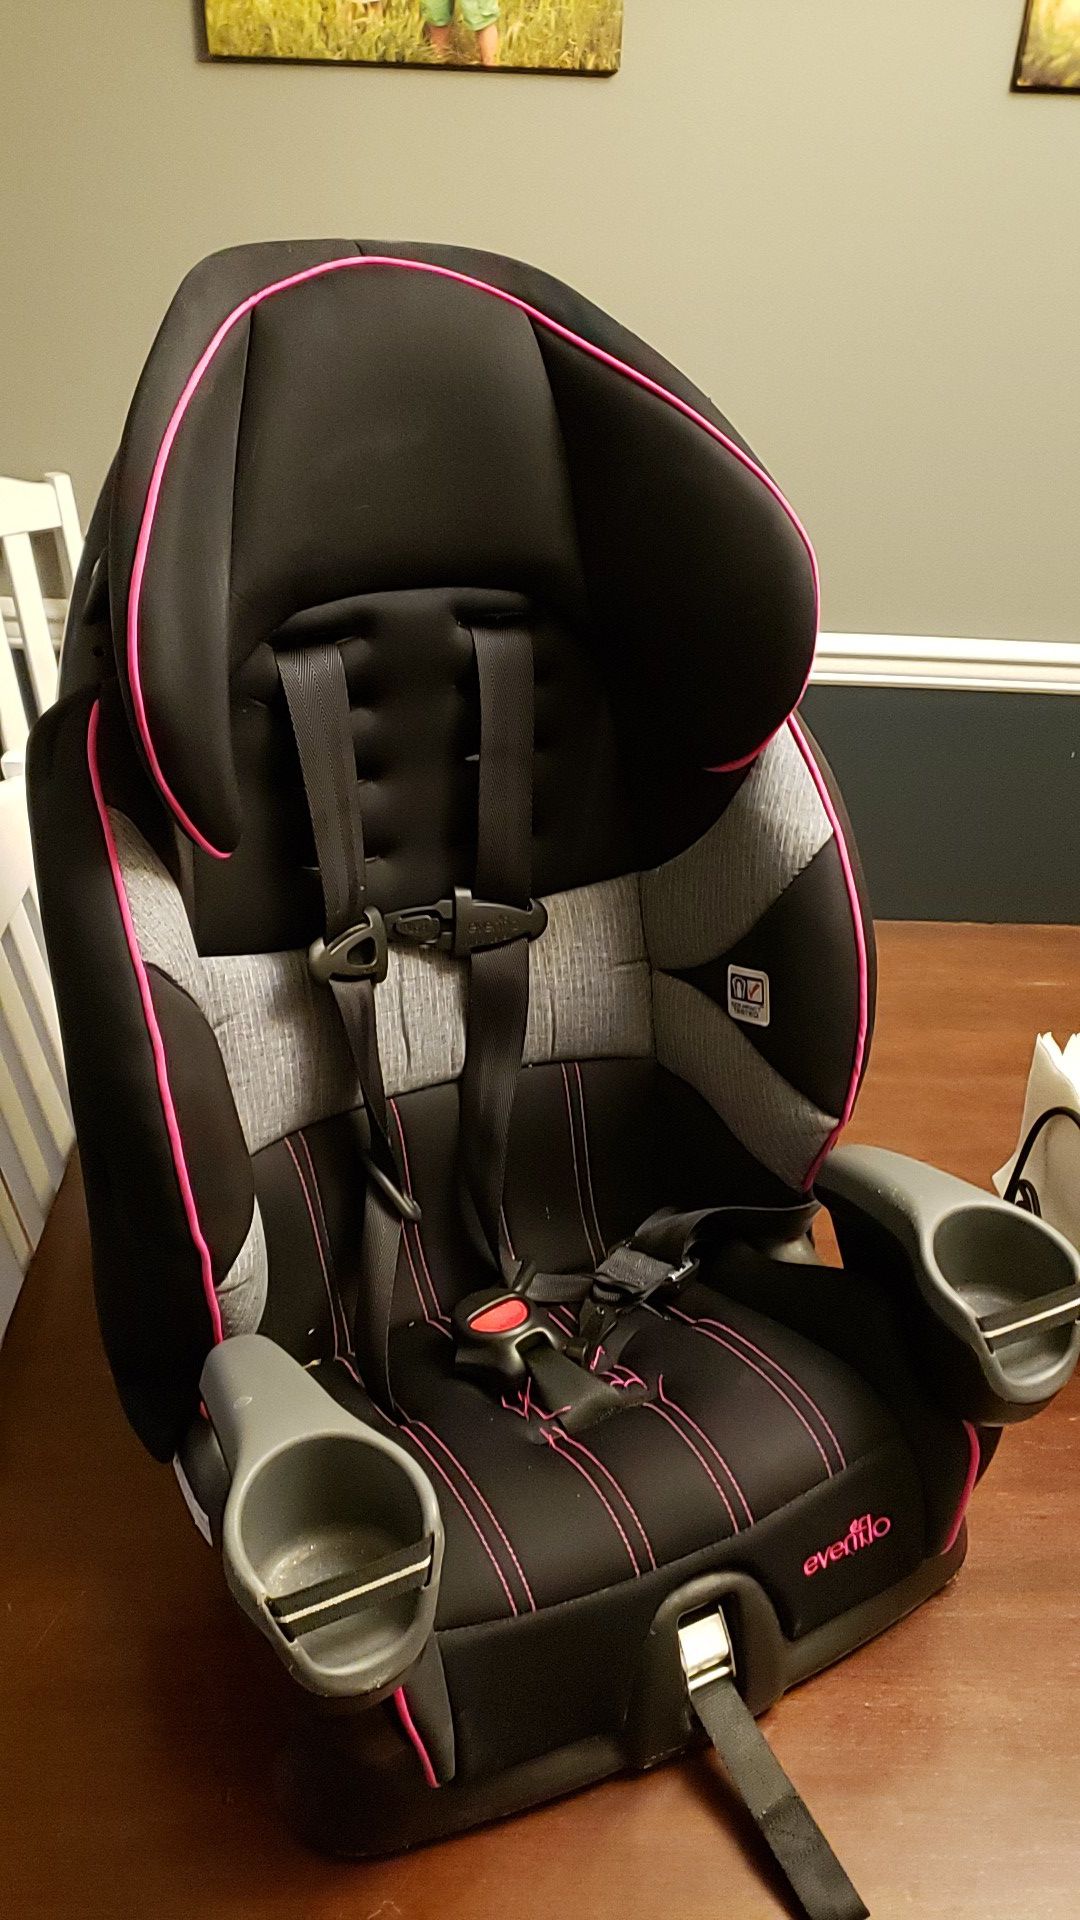 Child's car seat, Evenflo